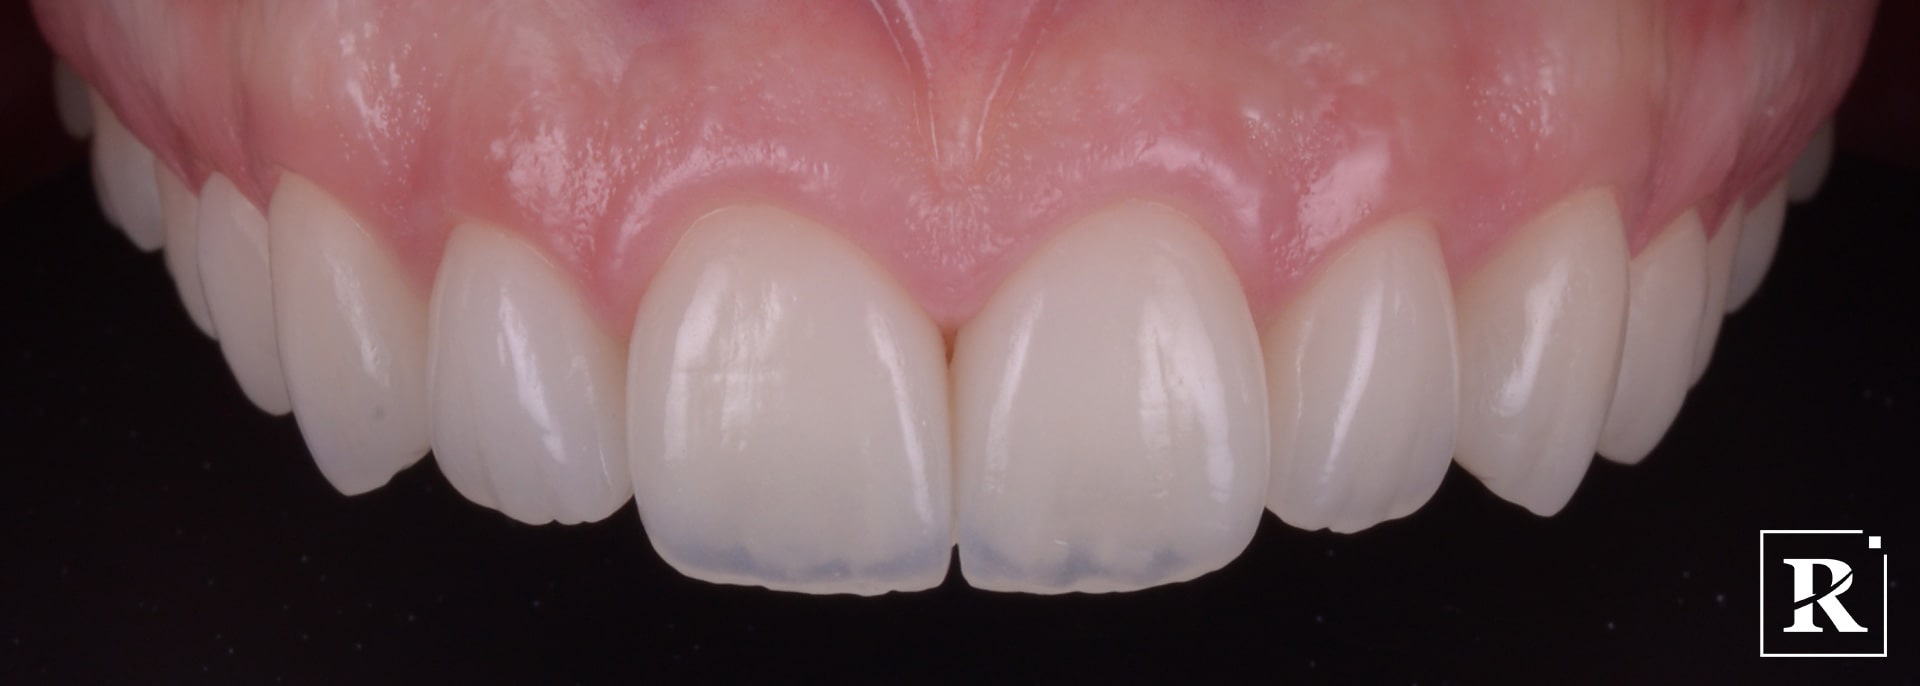 zambet estetic stomatologie clinica dentara timisoara clinica rugina